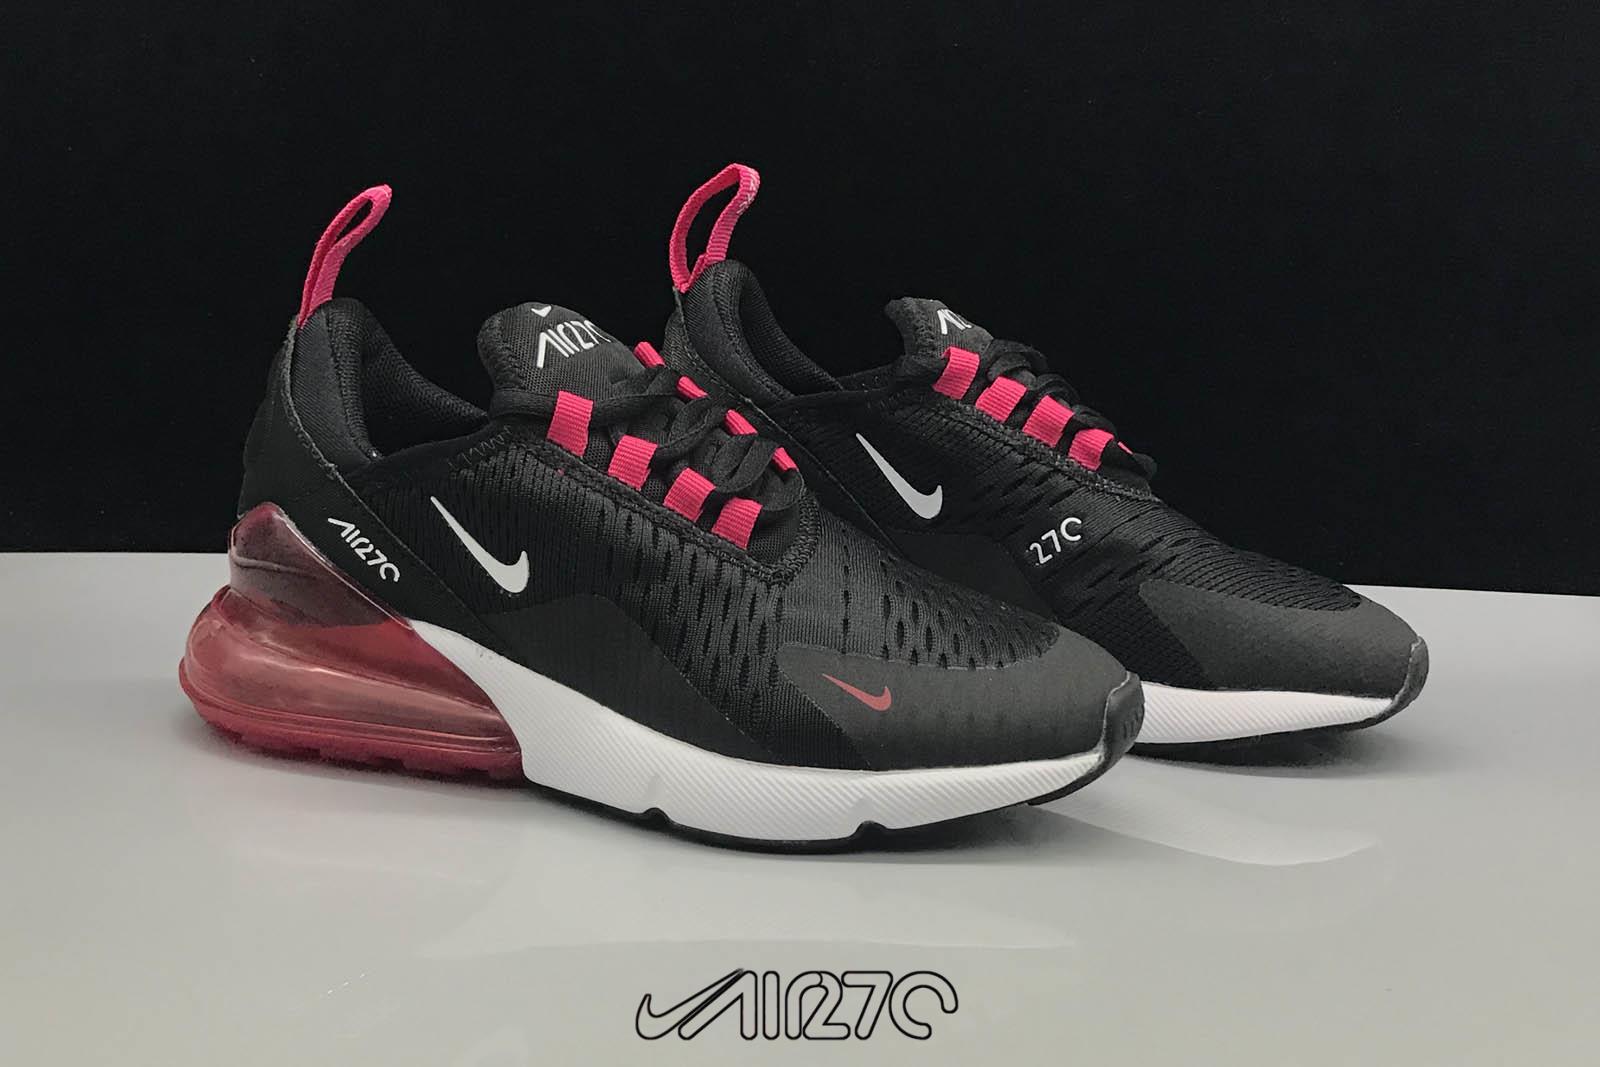 Shop GG Kids Nike Air Max 270 Black/Pink 11C - 3Y